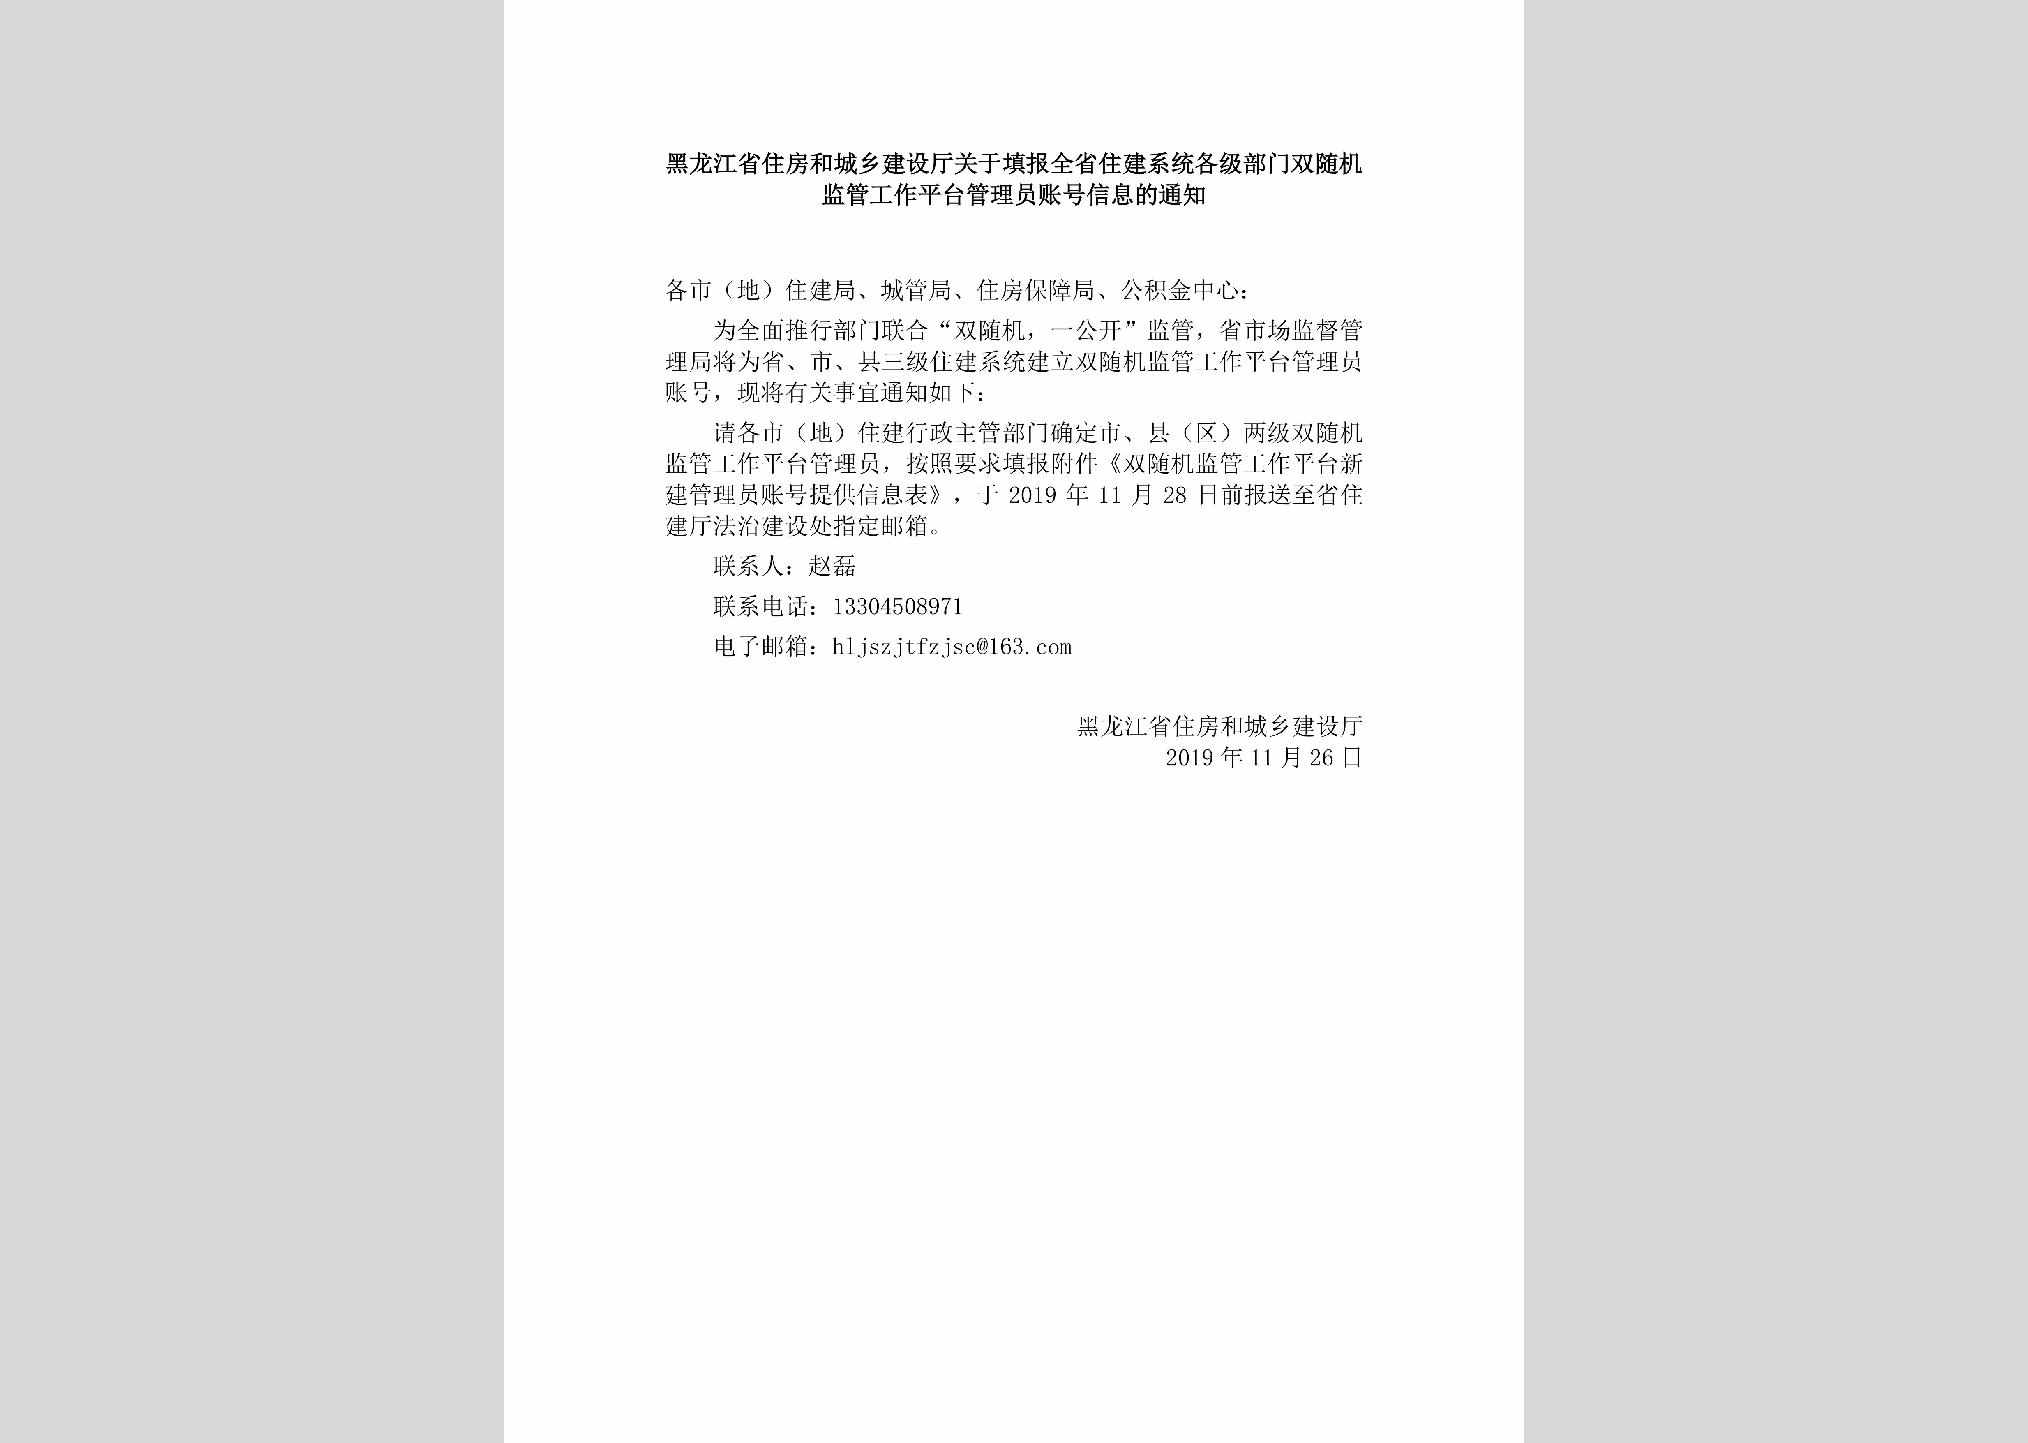 HLJ-JGGZPTGL-2019：黑龙江省住房和城乡建设厅关于填报全省住建系统各级部门双随机监管工作平台管理员账号信息的通知